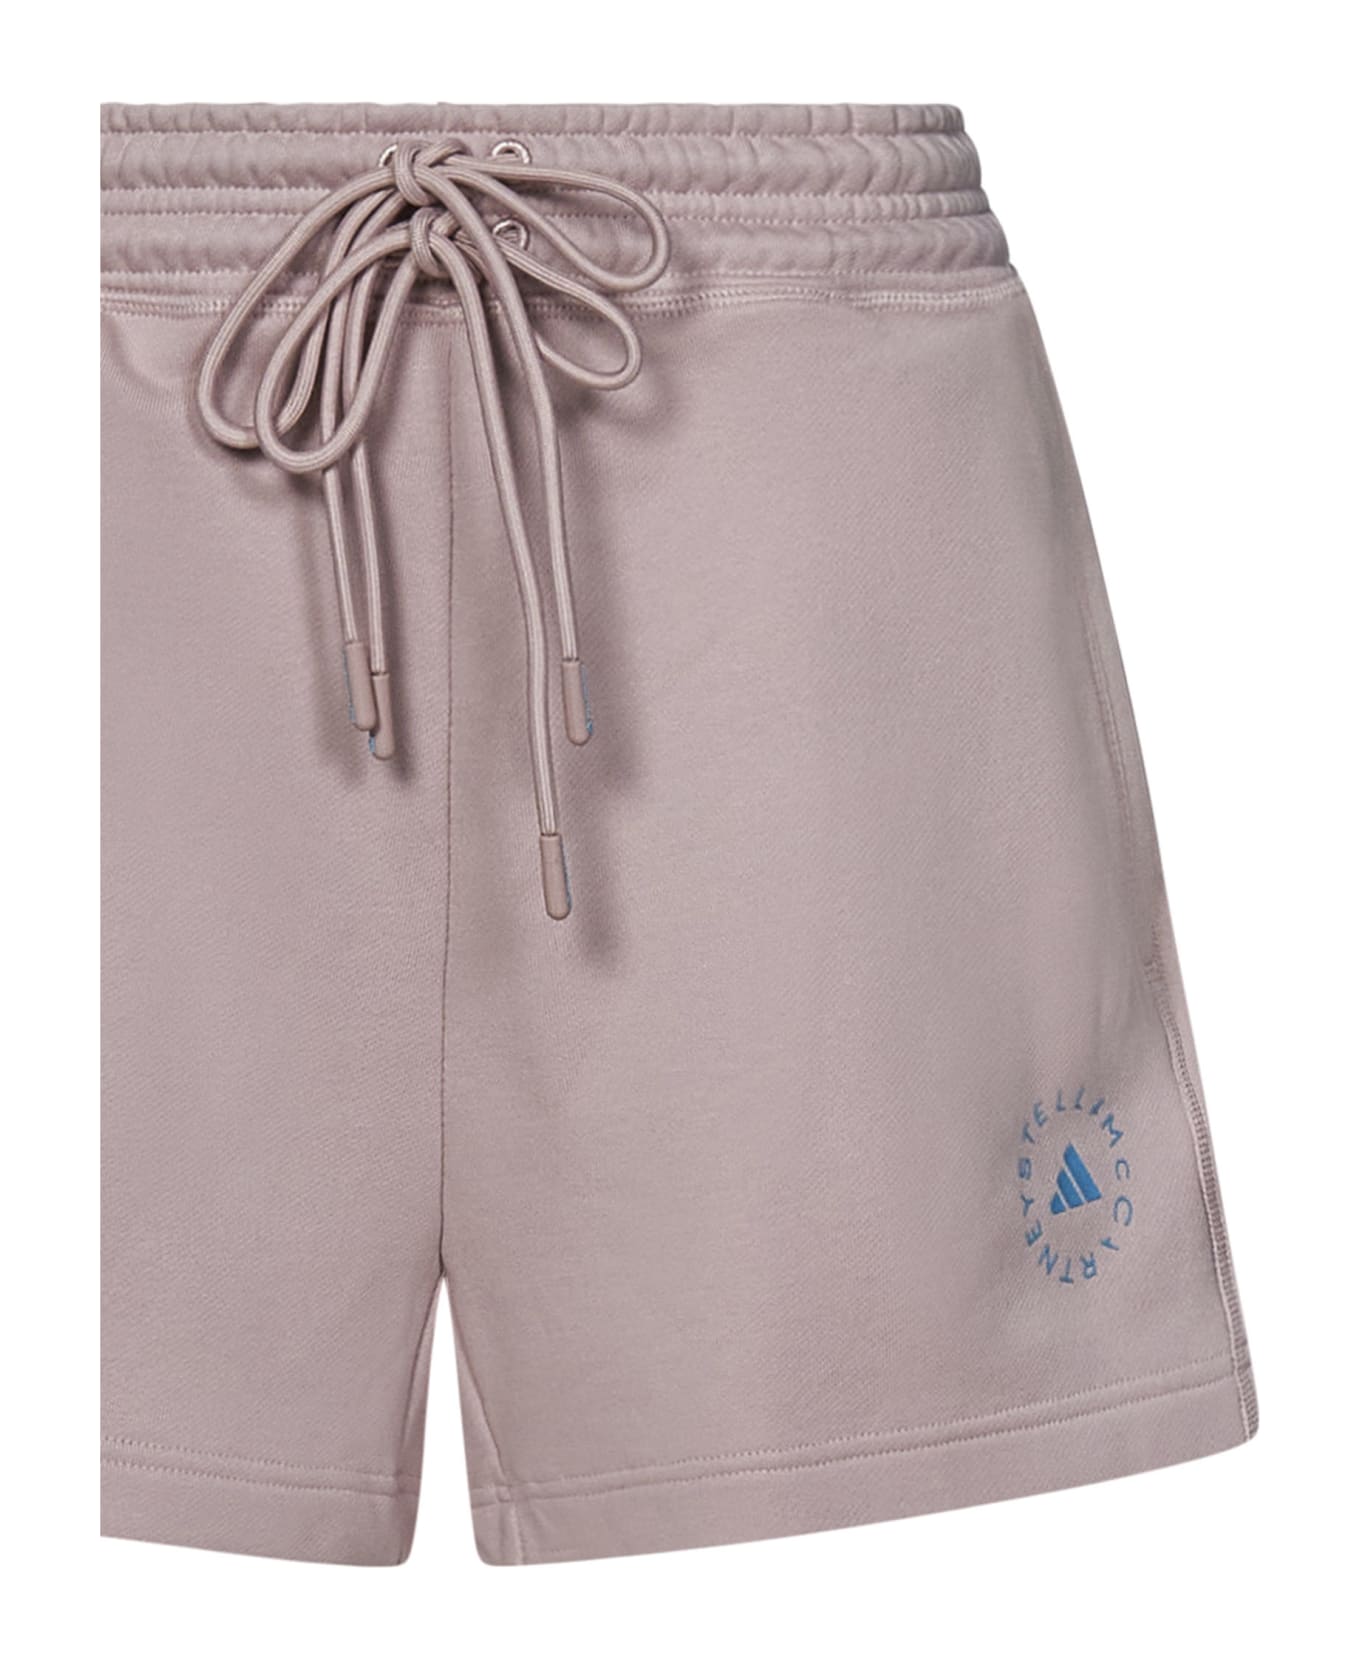 Adidas by Stella McCartney Shorts - Pink